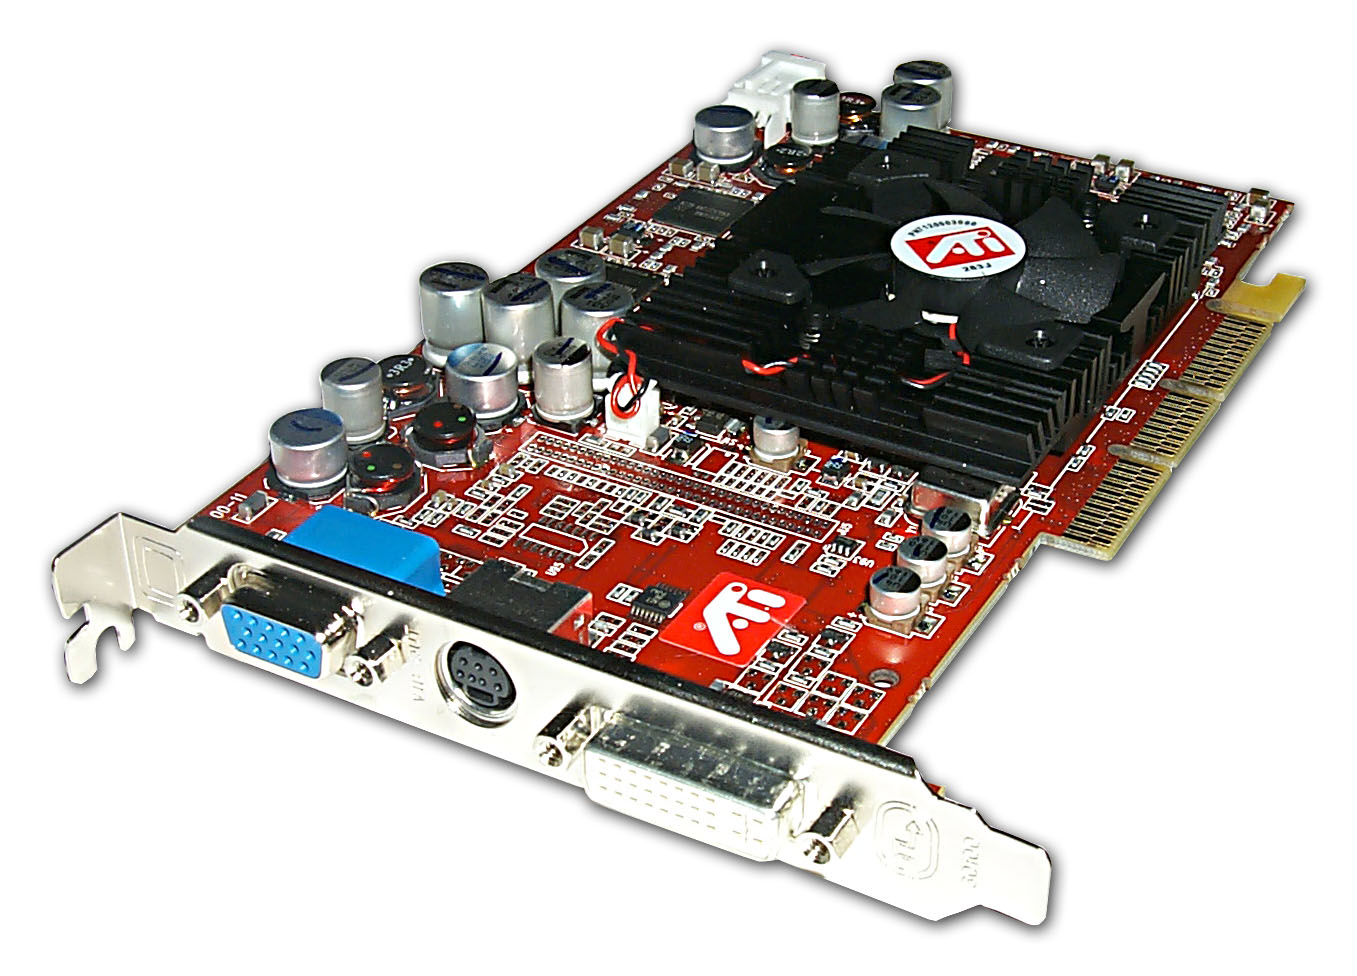 Ati radeon купить. ATI Radeon 9700 Pro. Видеокарта ATI Radeon 9500. Radeon 9500 Pro 128mb.